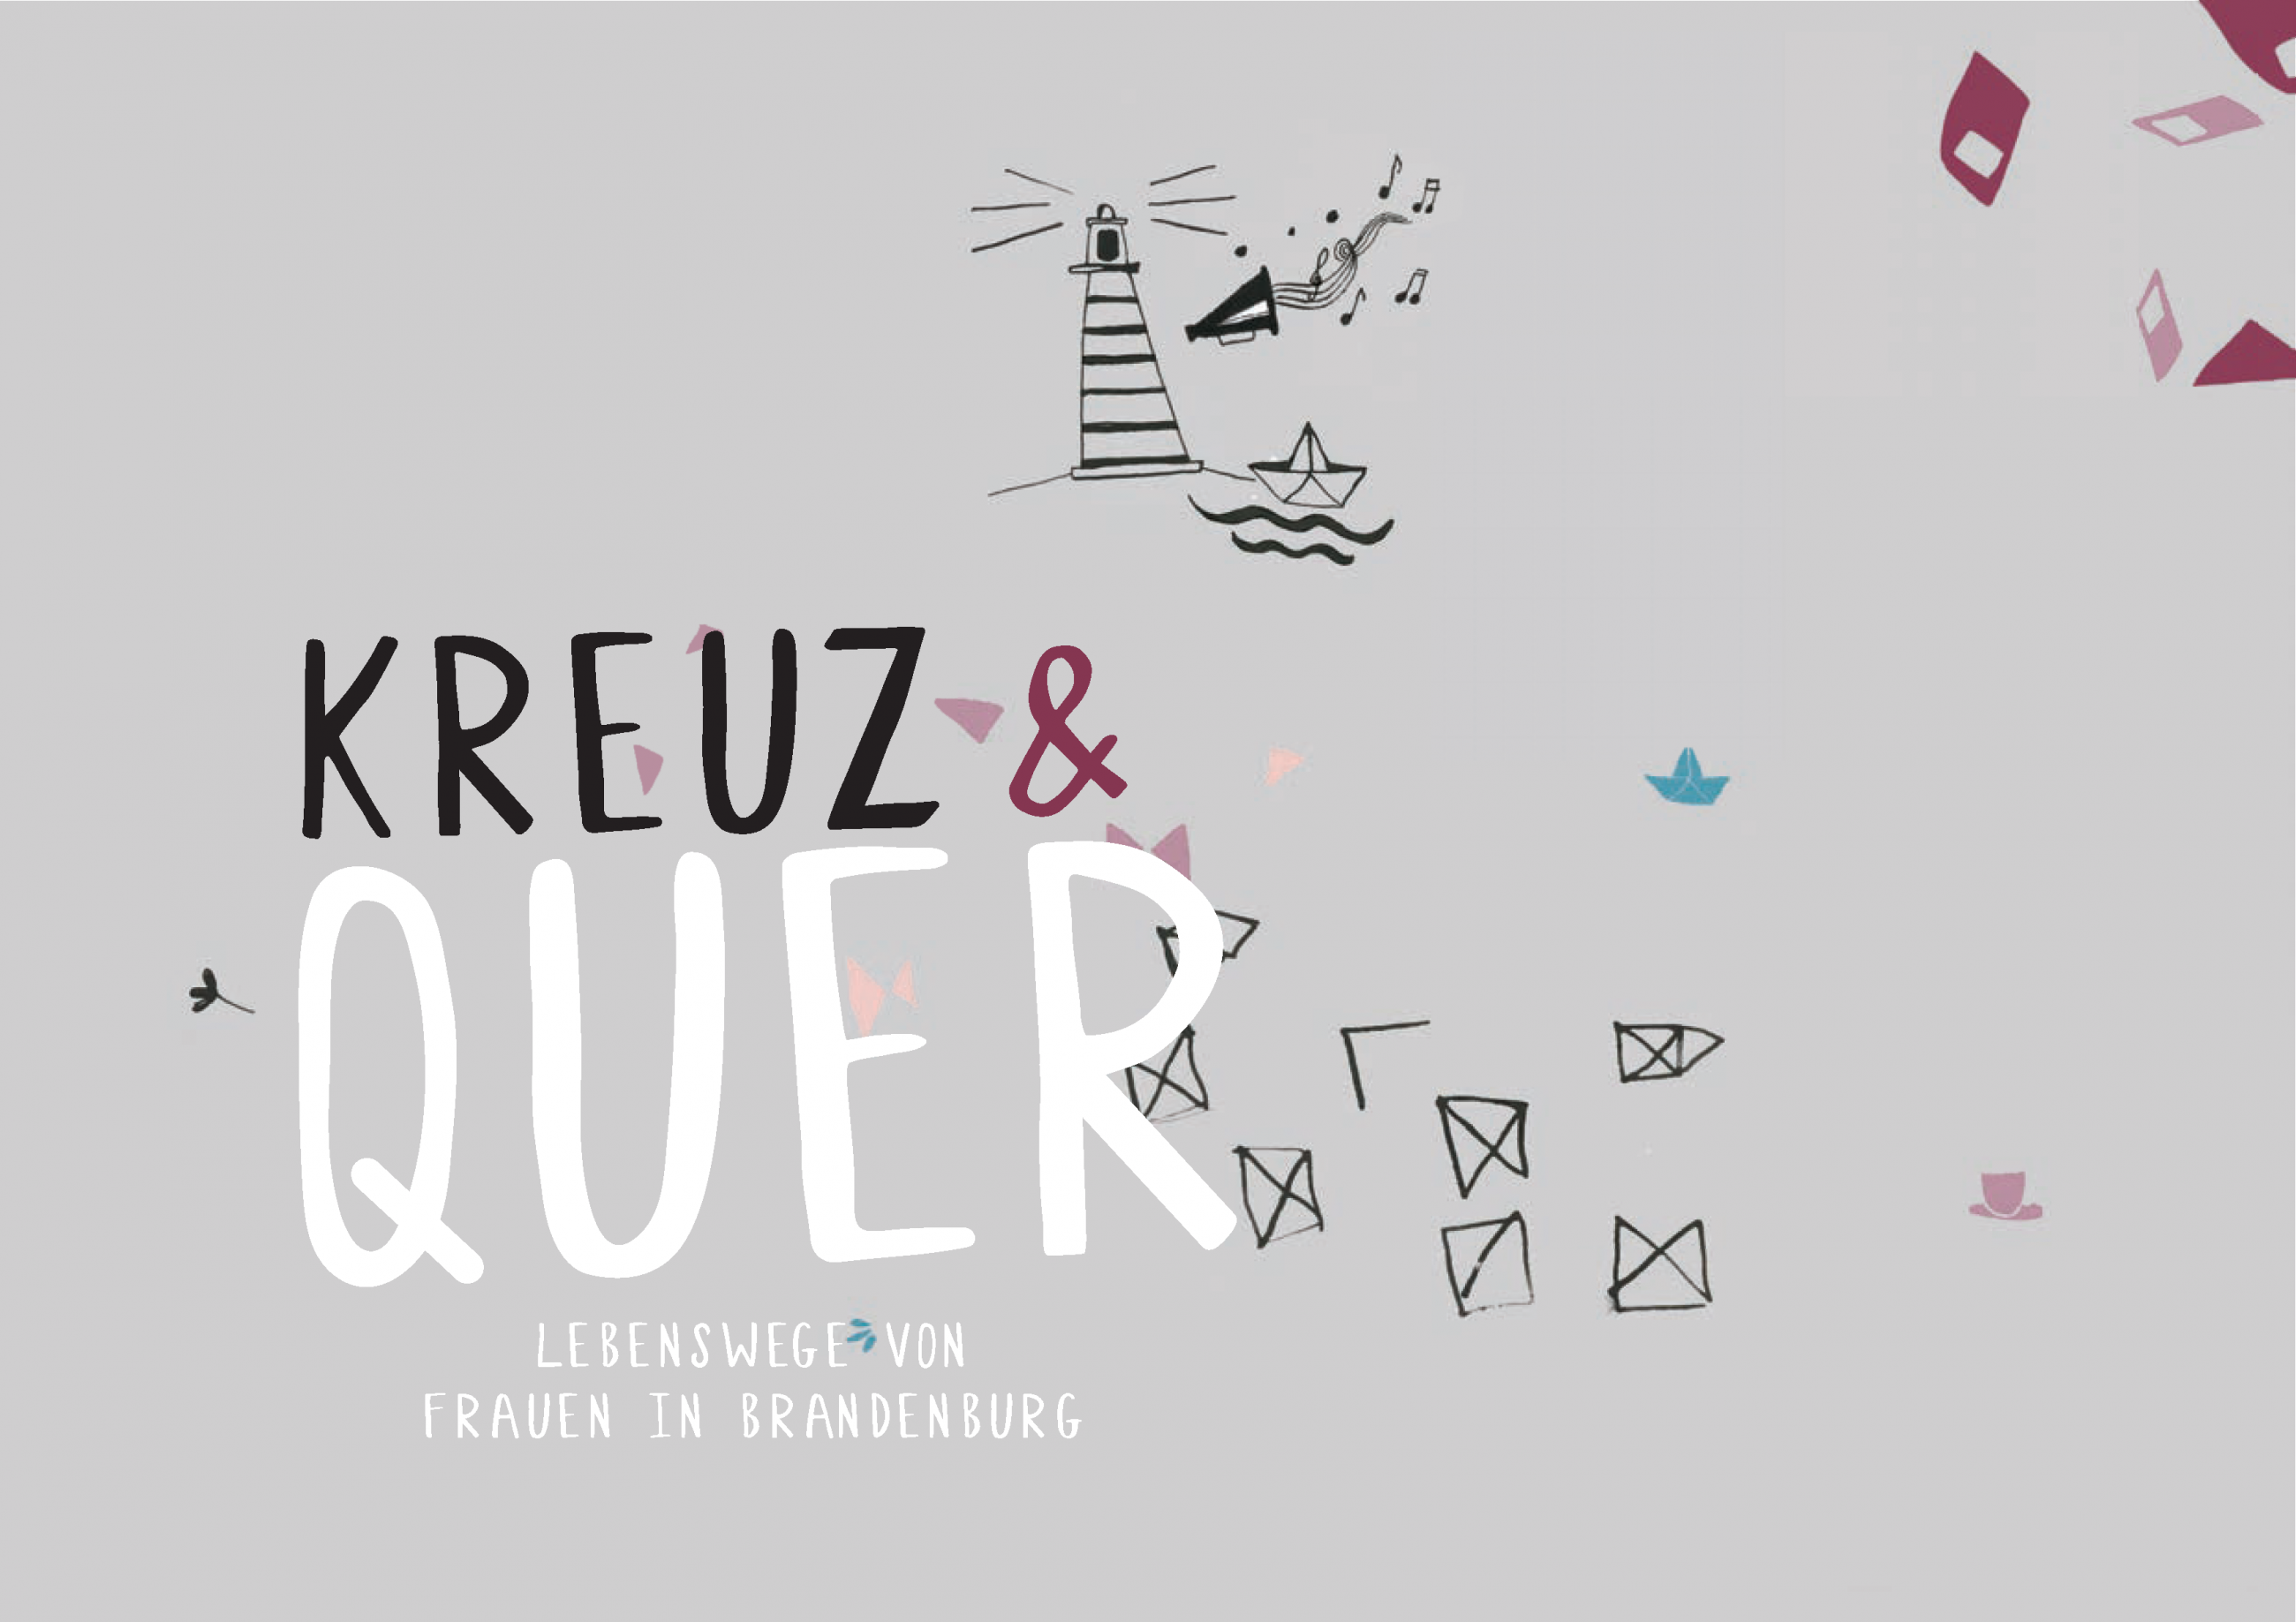 Coveransicht des Katalogs zur Ausstellung Kreuz & Quer